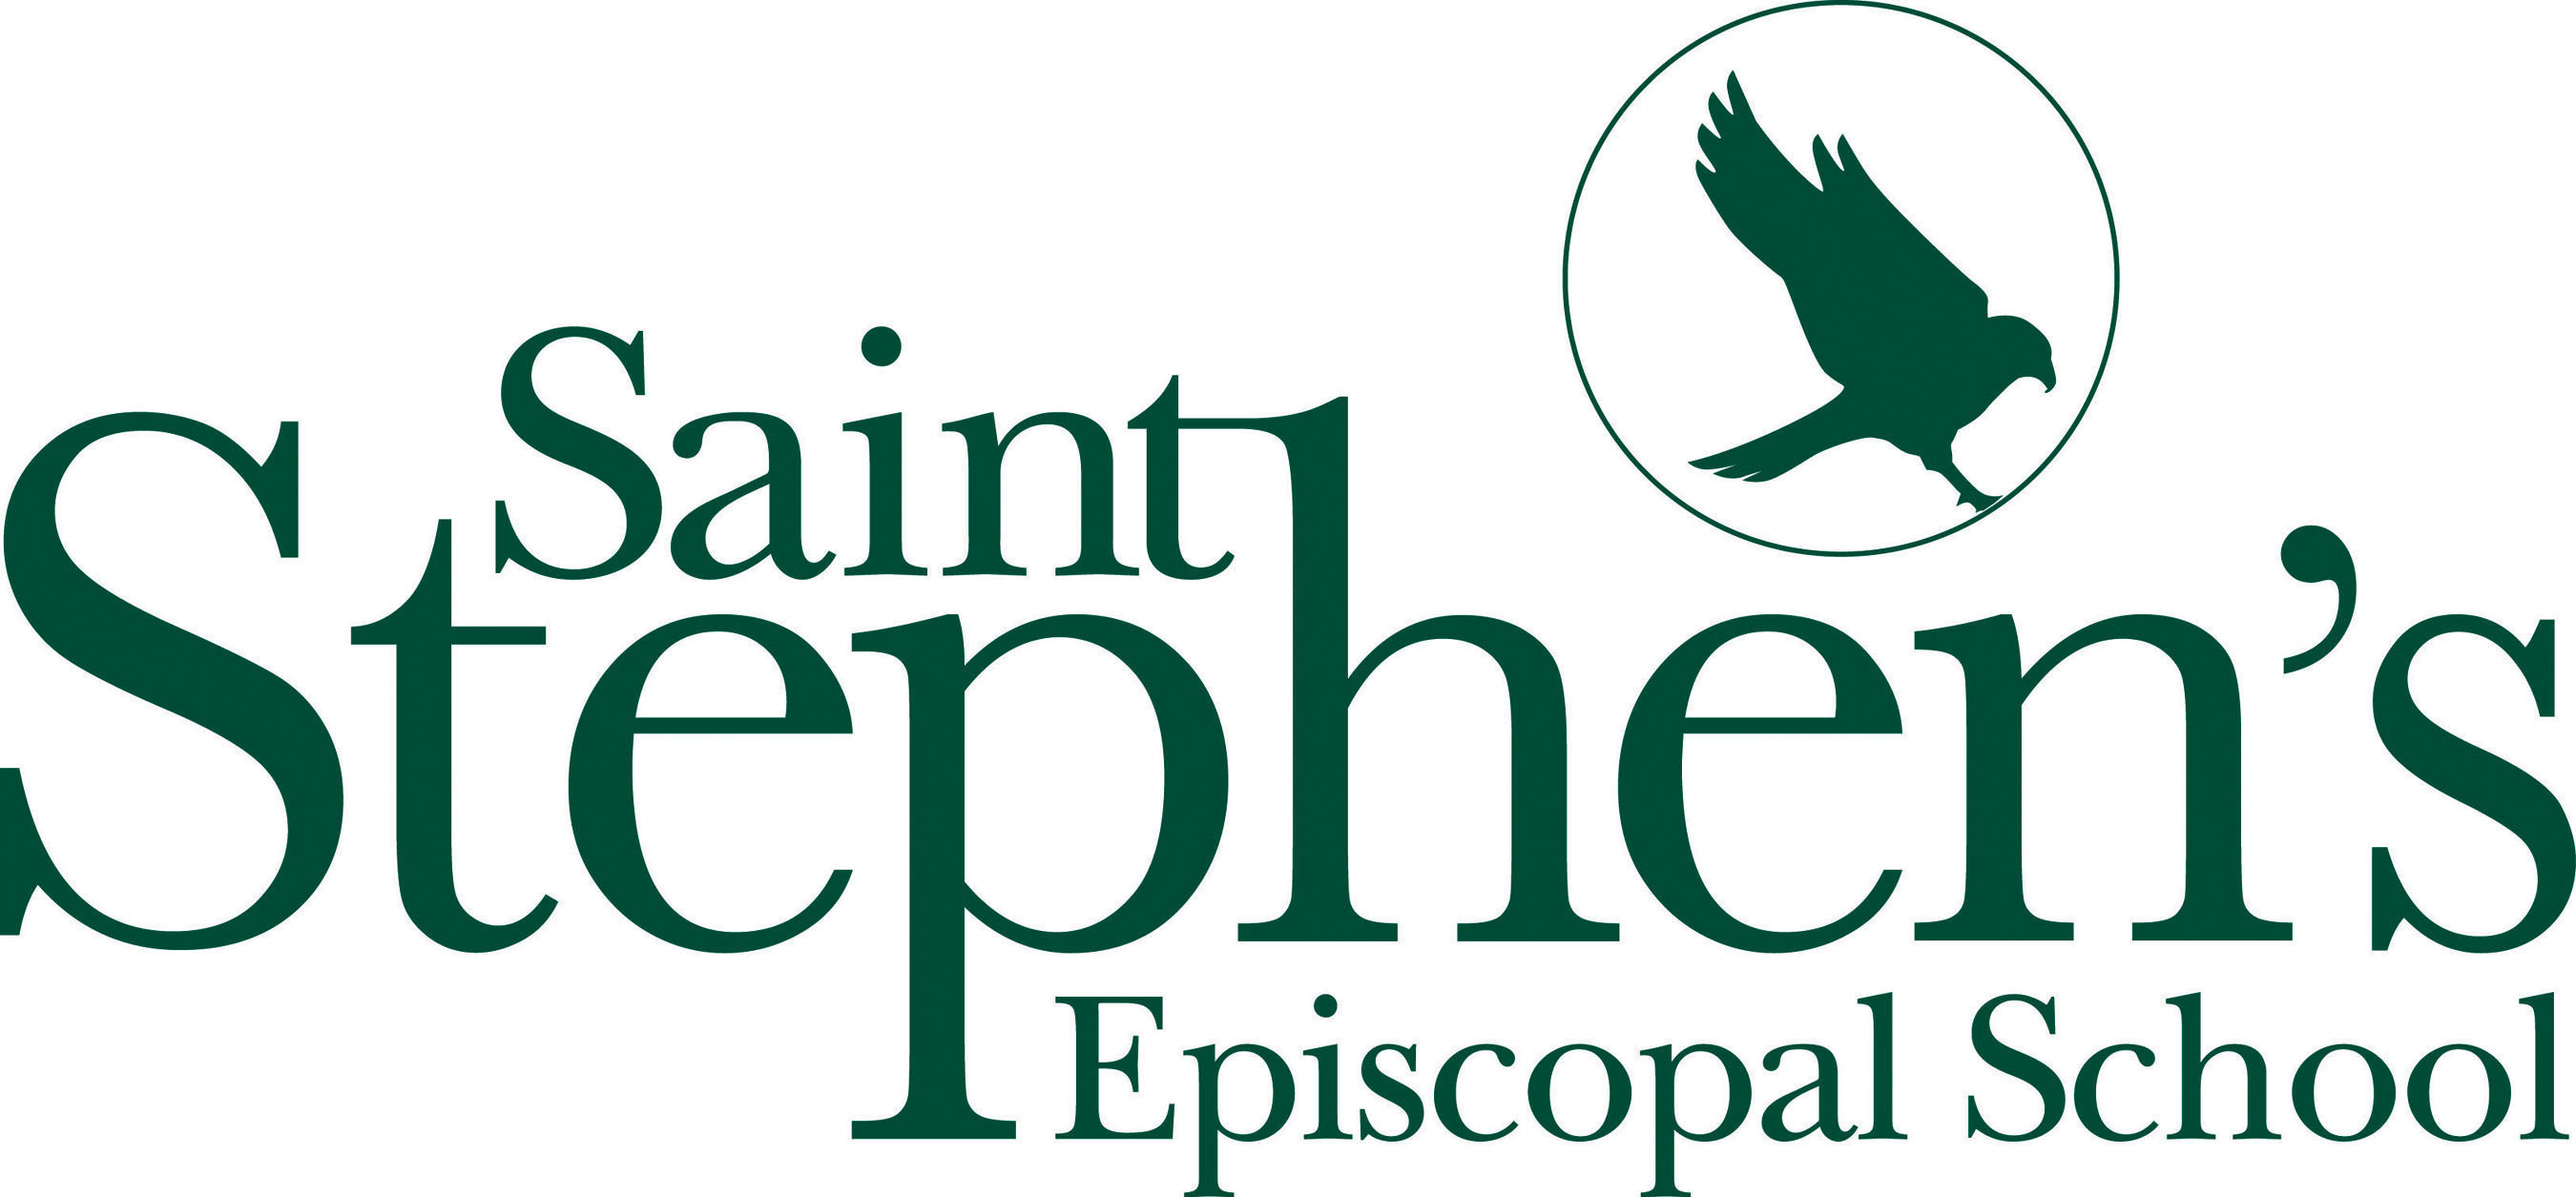 Saint Stephen's Episcopal School logo. (PRNewsFoto/Saint Stephen's Episcopal School) (PRNewsFoto/SAINT STEPHEN'S EPISCOPAL SCHOOL)